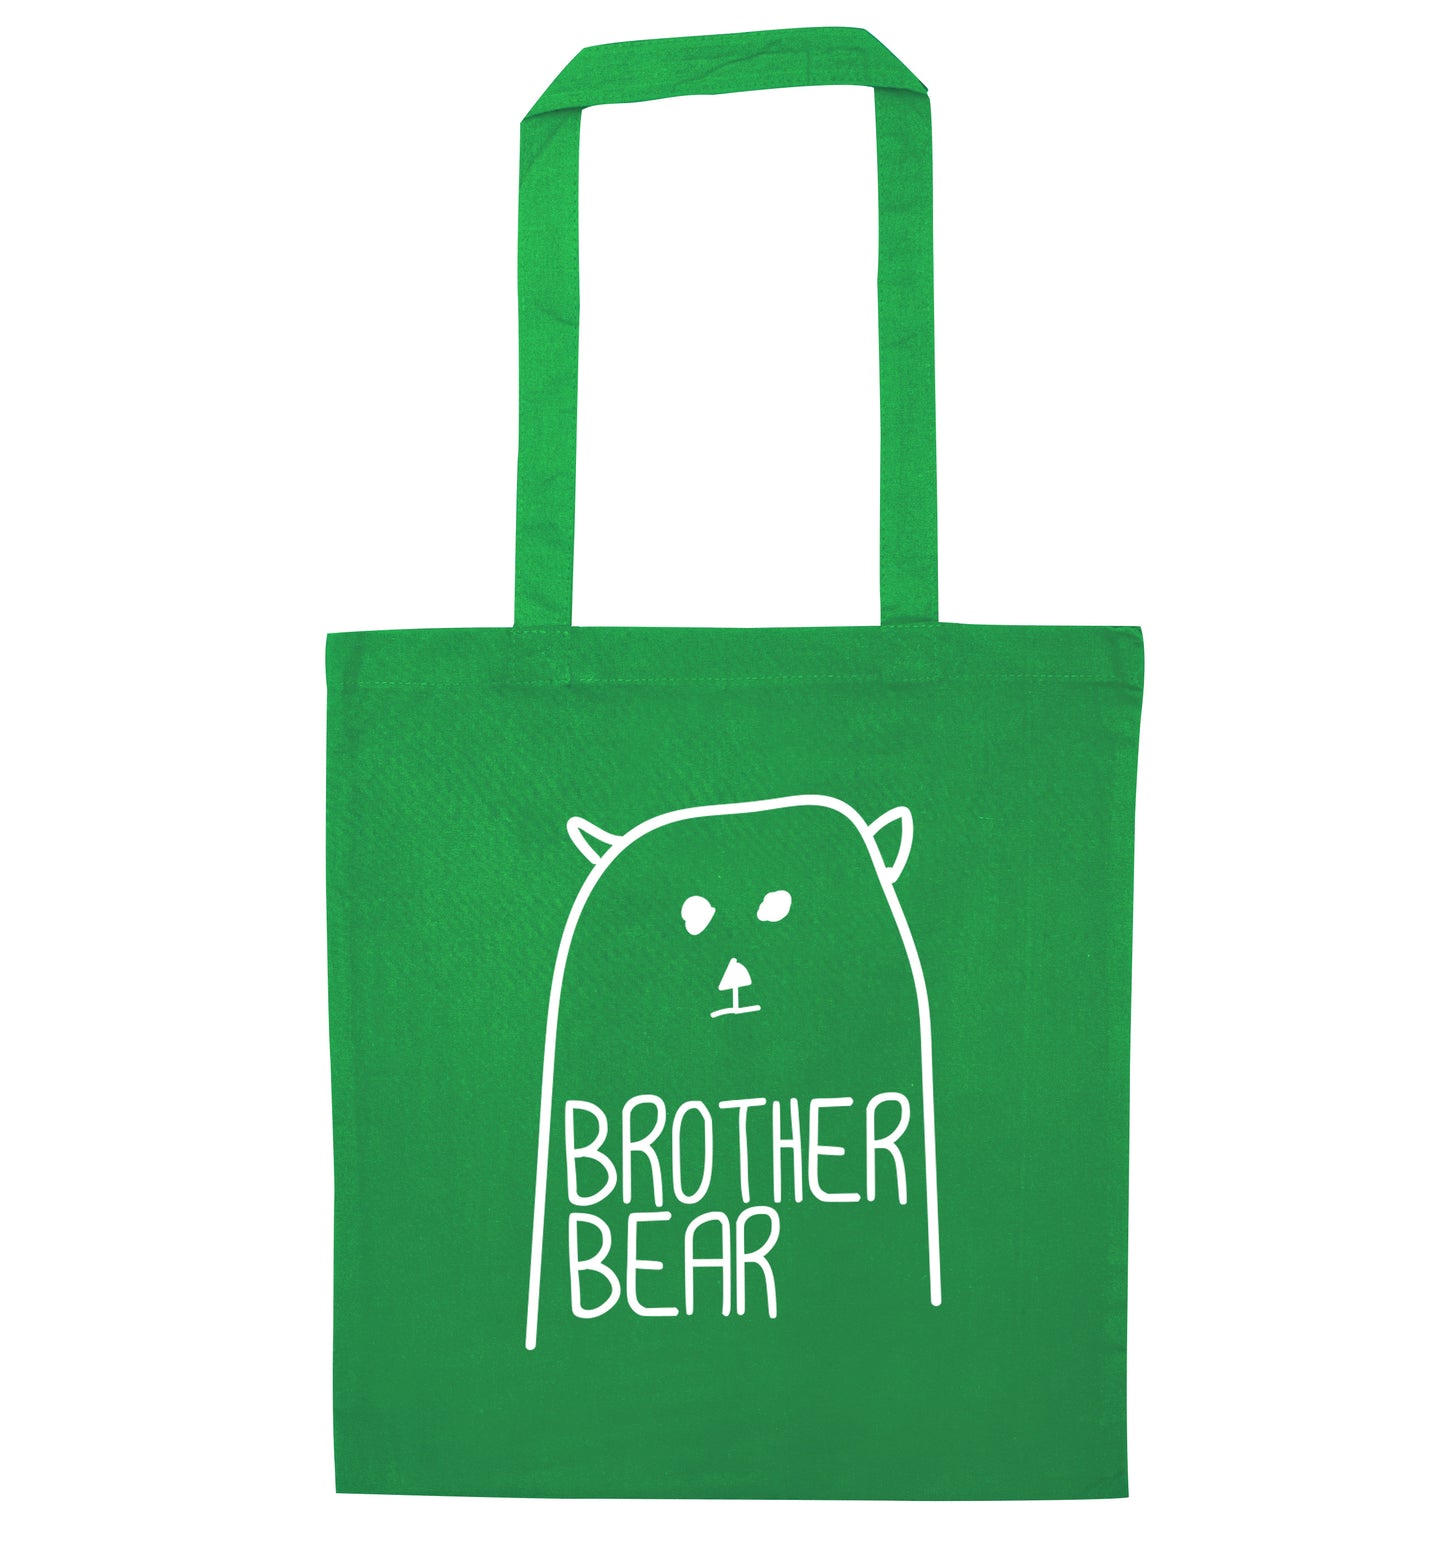 Brother bear green tote bag